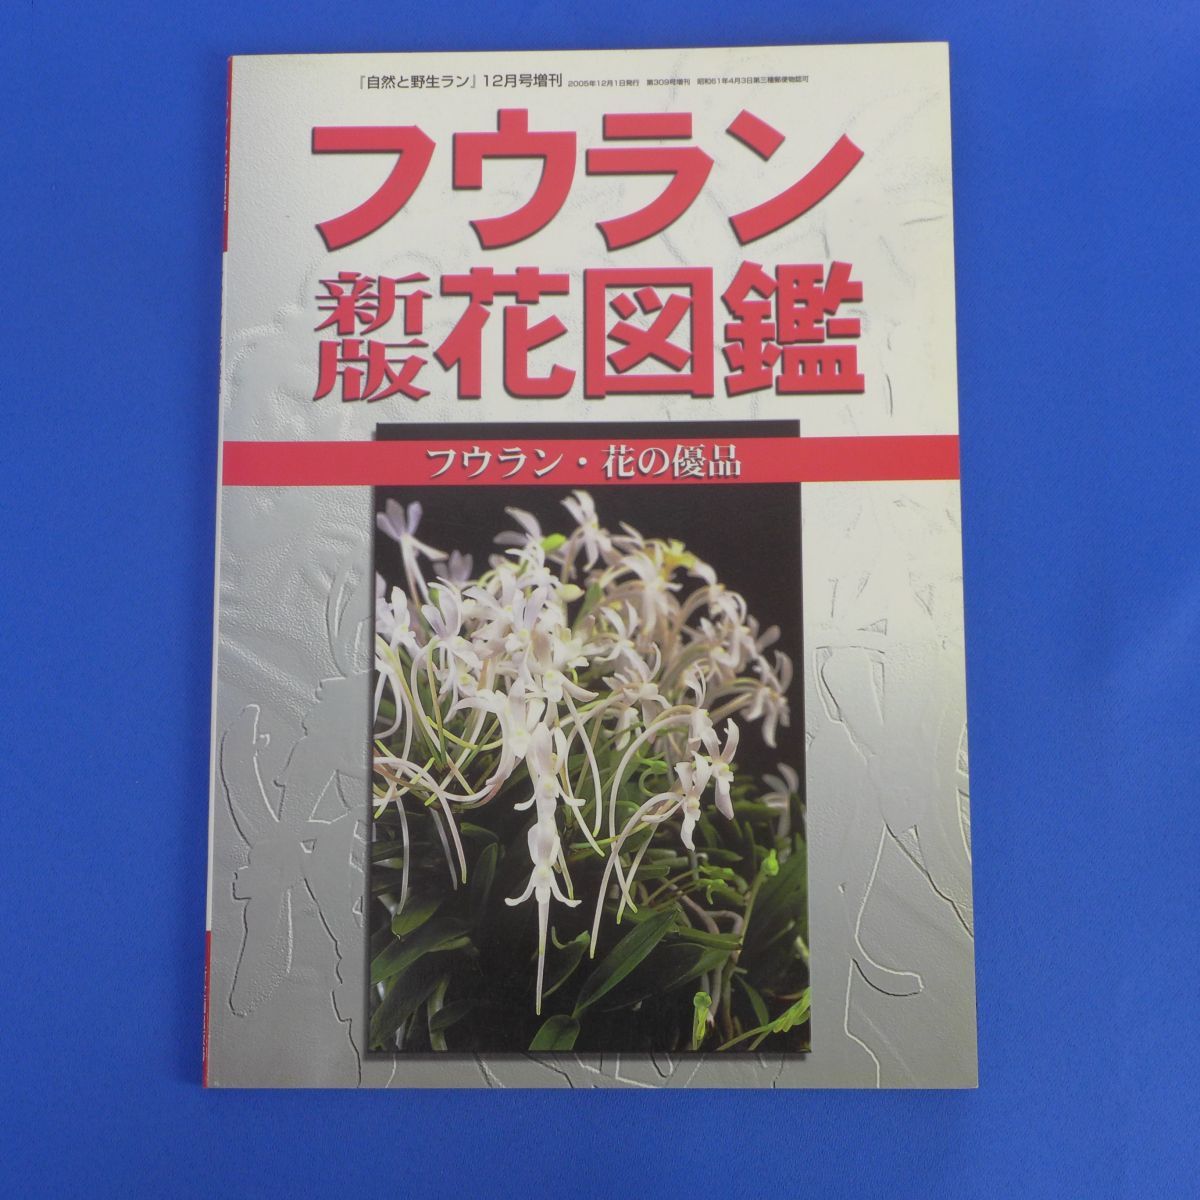 yuS5643*flaun new version flower illustrated reference book nature .. raw Ran increase . new plan publish department 